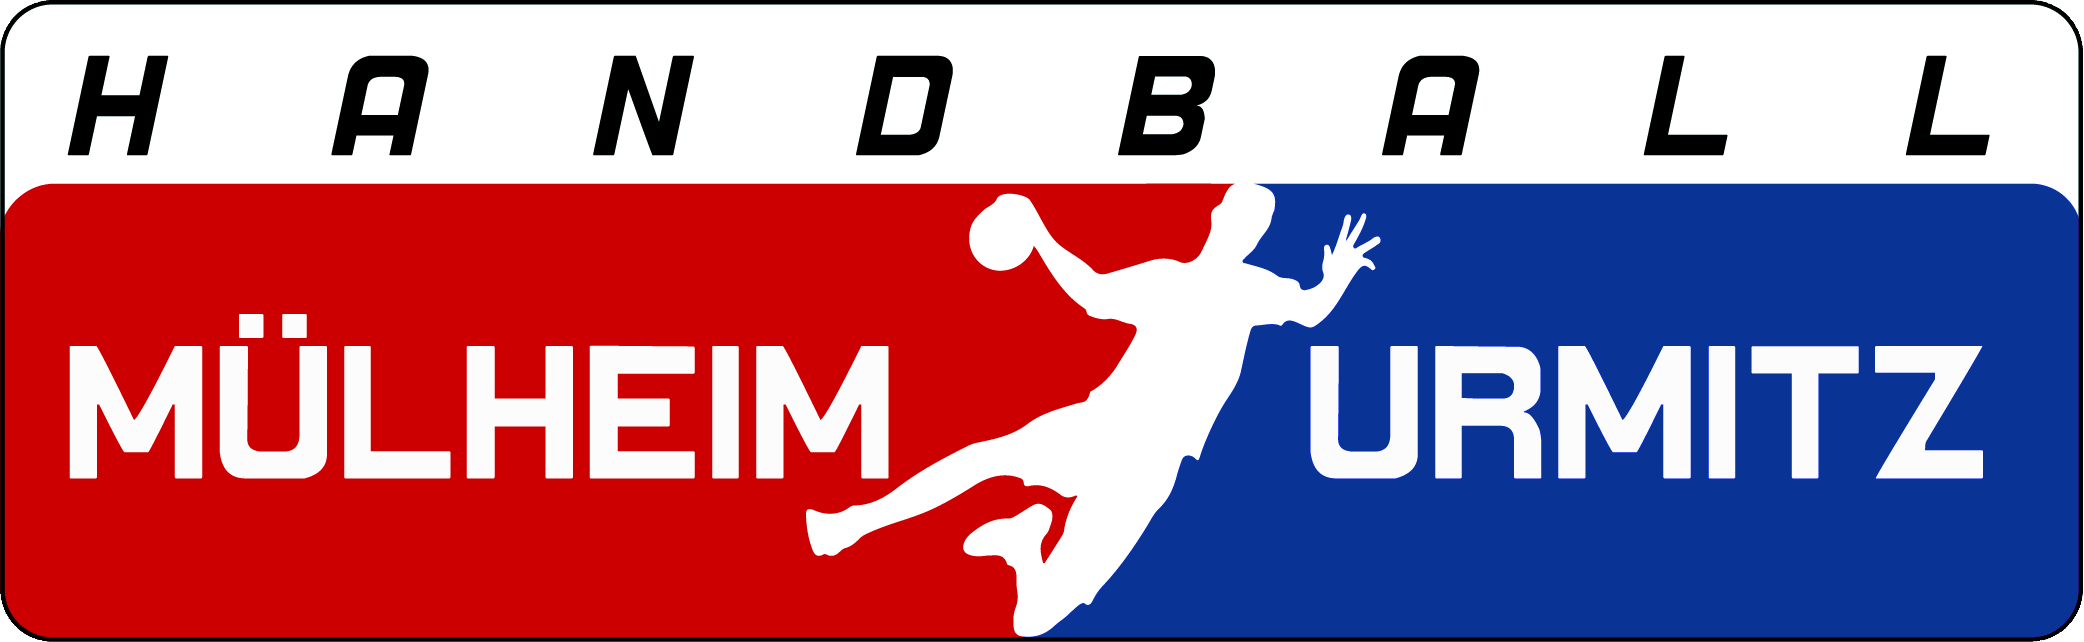 Logo Handball Mülheim-Urmitz III